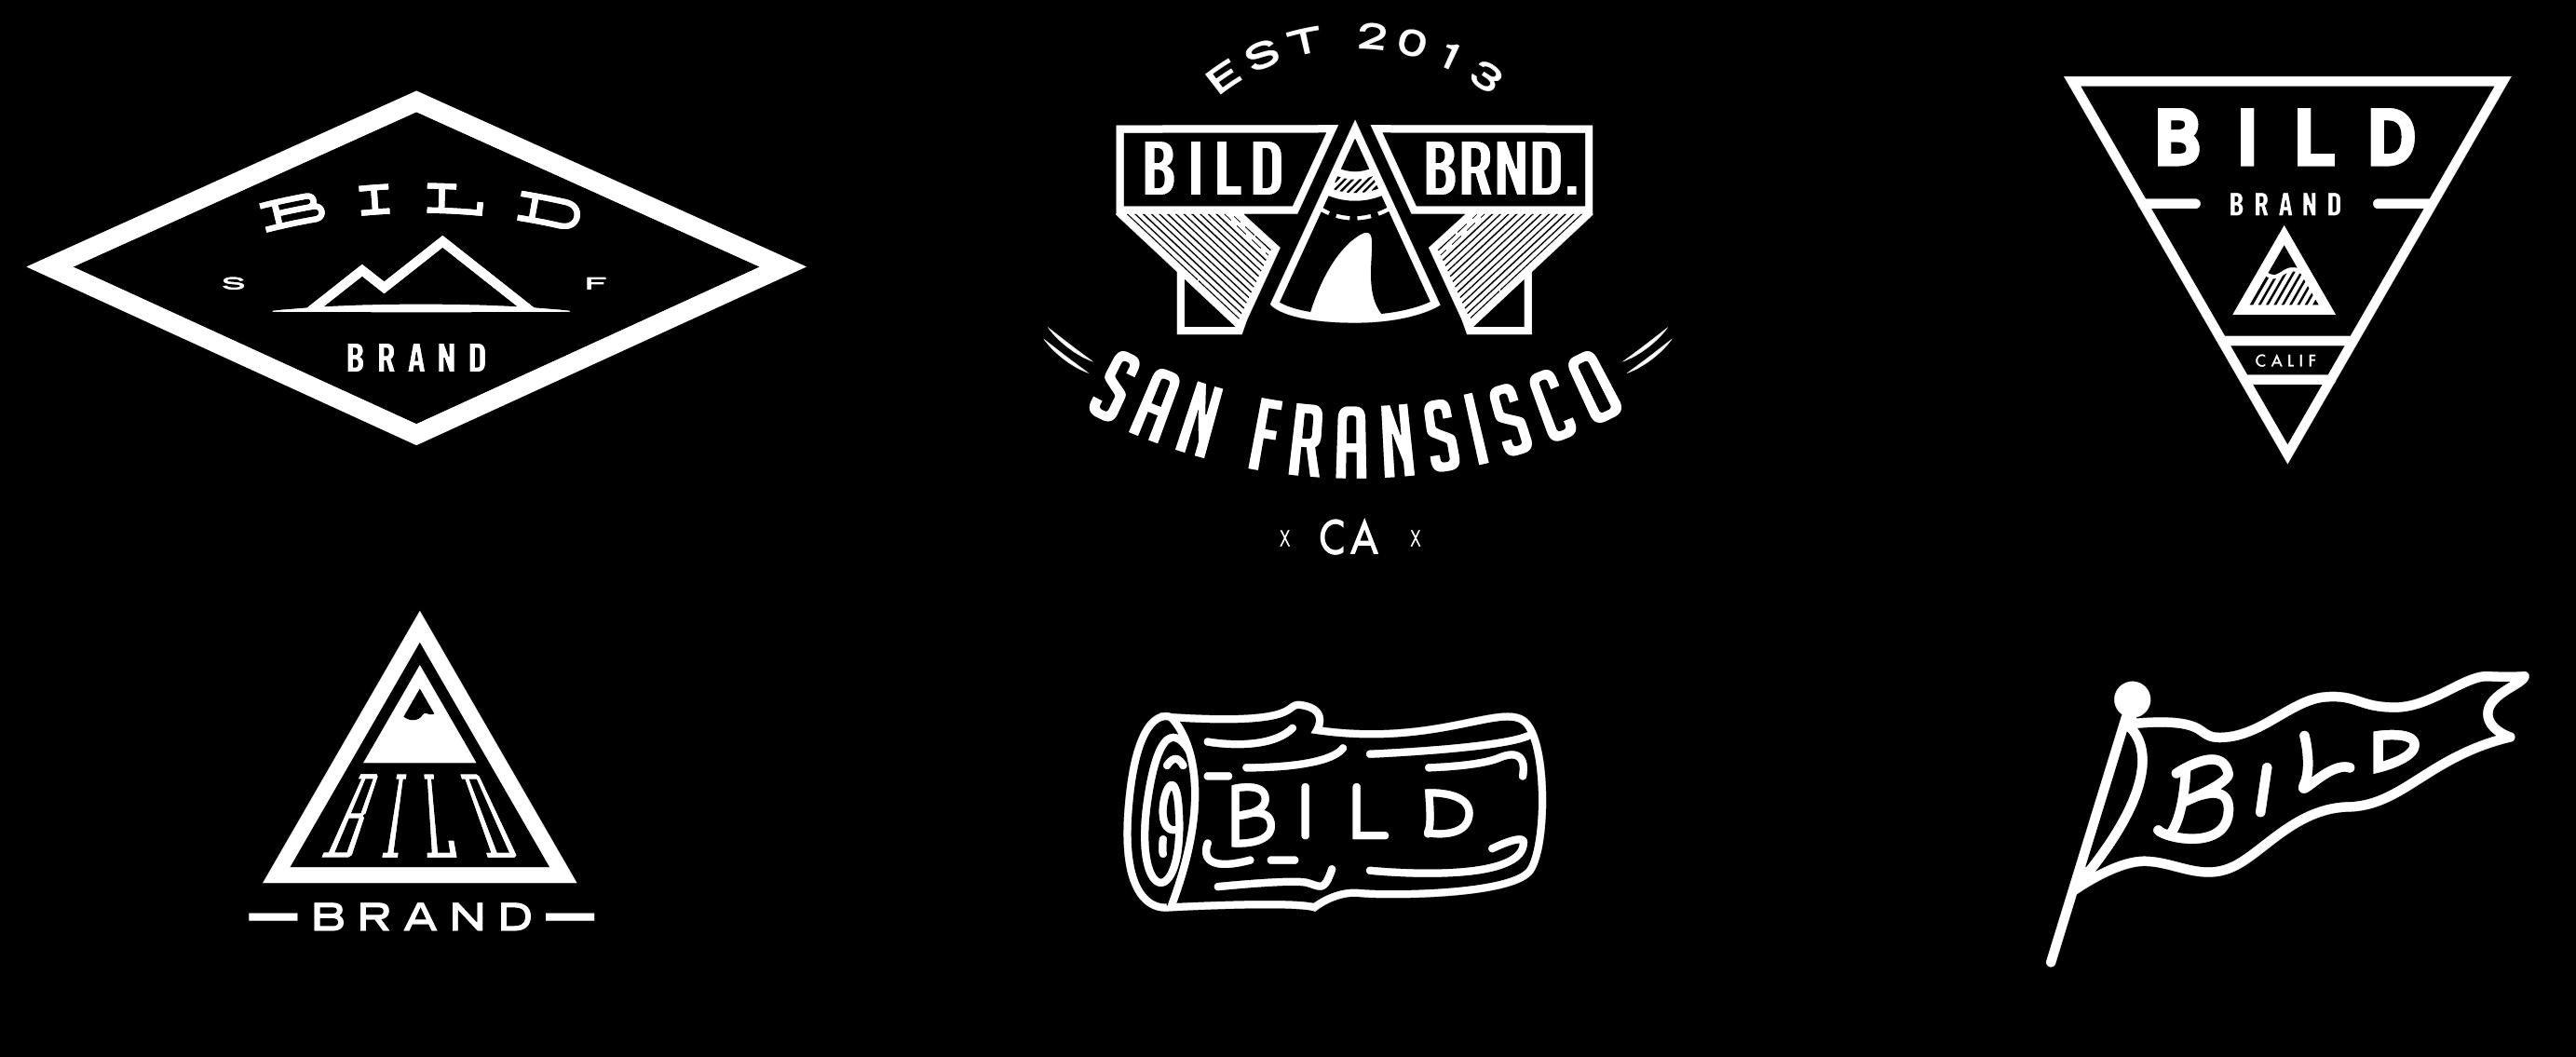 Triangle Clothing Brand Logo - BILD Brand Identiy Design | Skillshare Projects